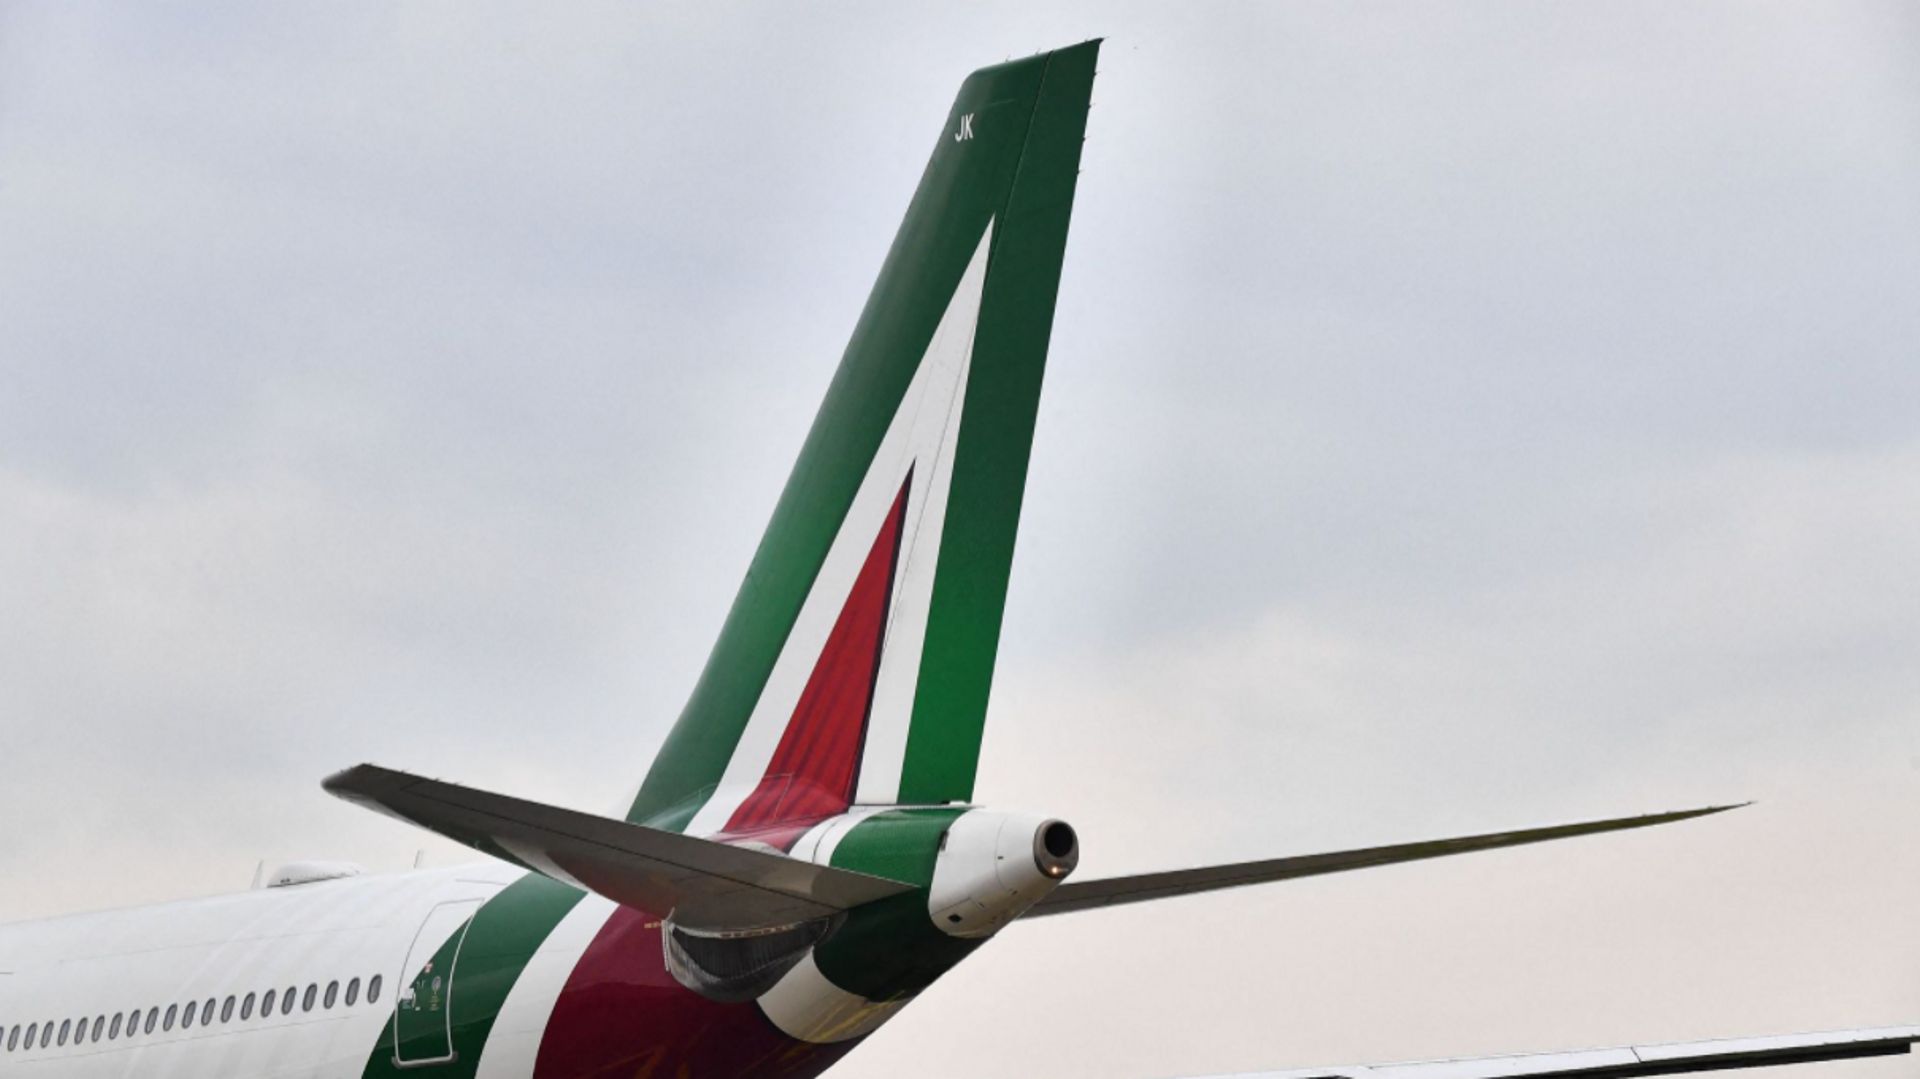 Avion Alitalia sur le tarmac de l’aéroport de Rome-Fiumicino en mars 2021